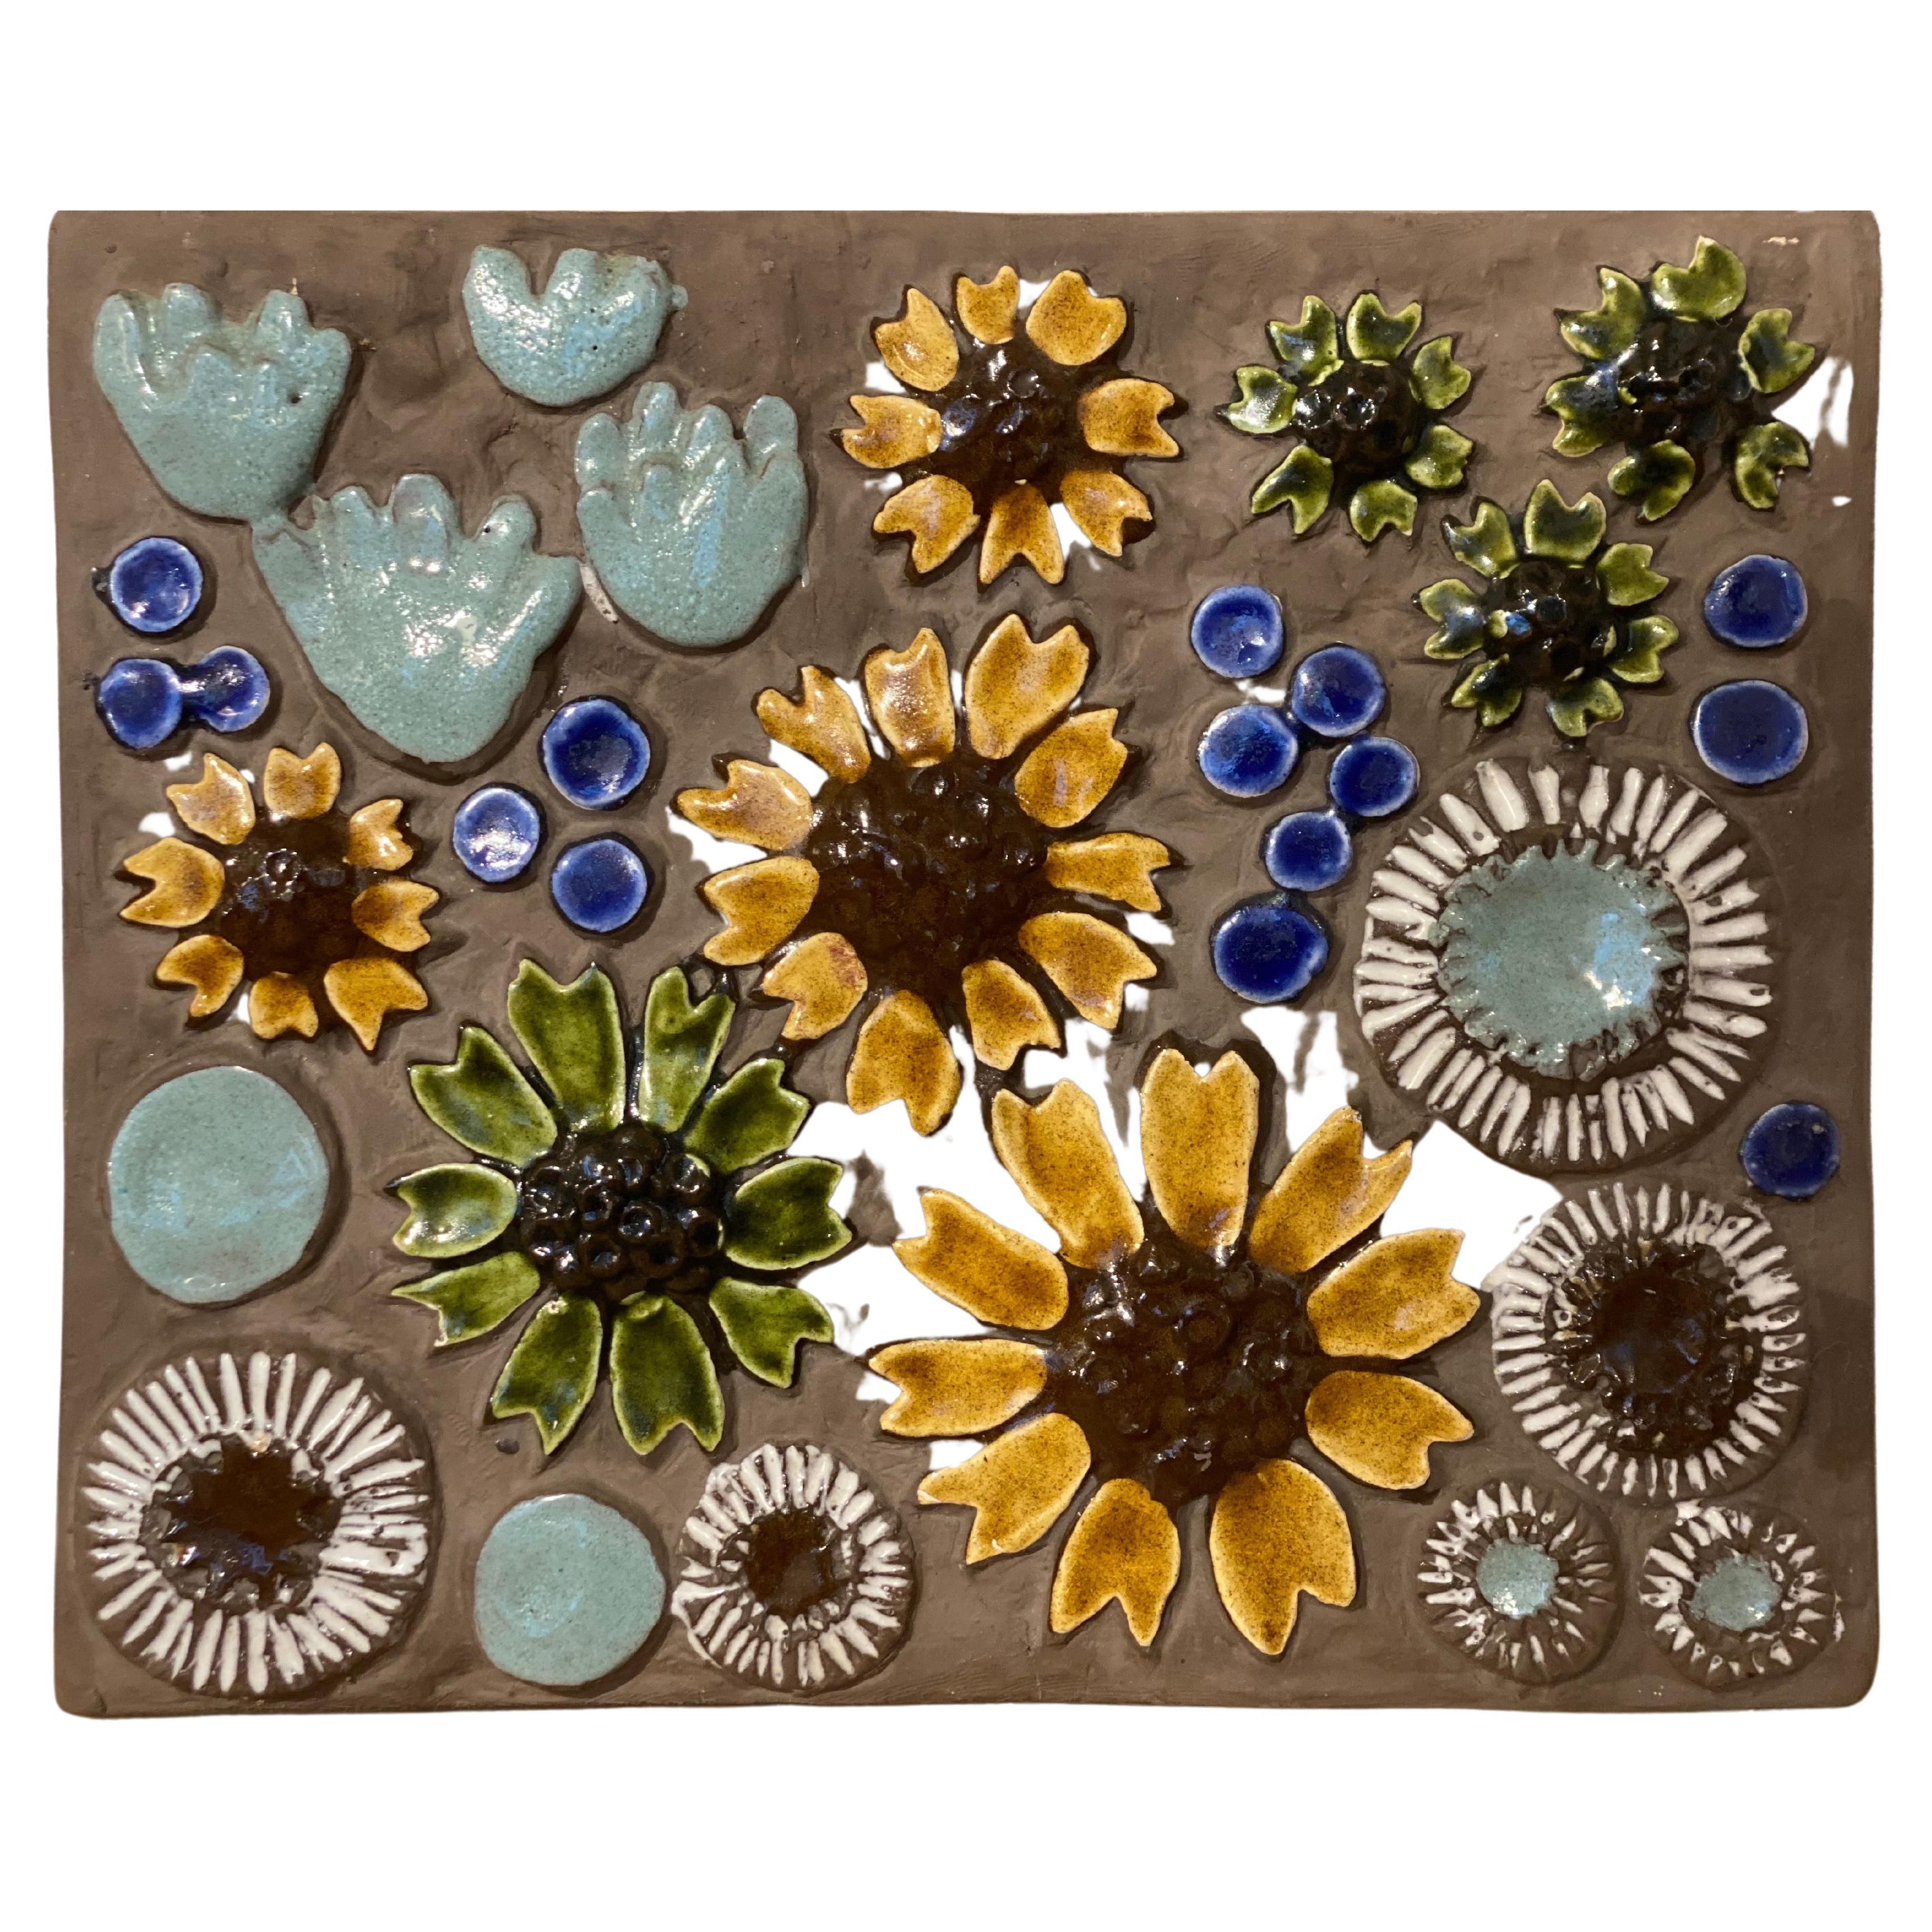 Ceramic Flower Tile designed by Aimo Nietosvuori for JIE Gantofta, Sweden